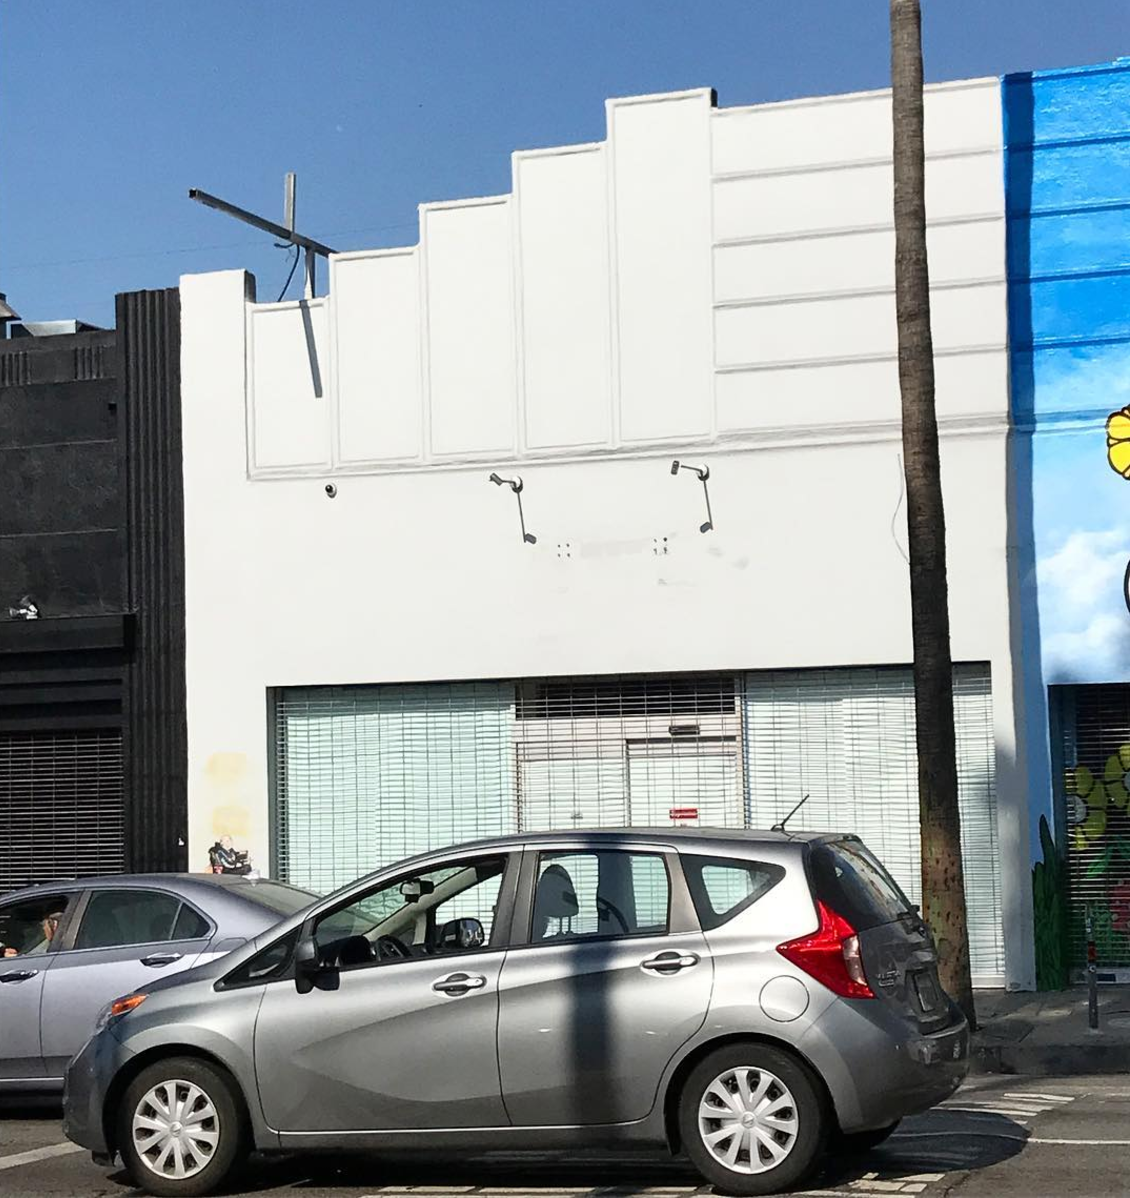 Supreme Have Closed Their LA Flagship Fairfax Store